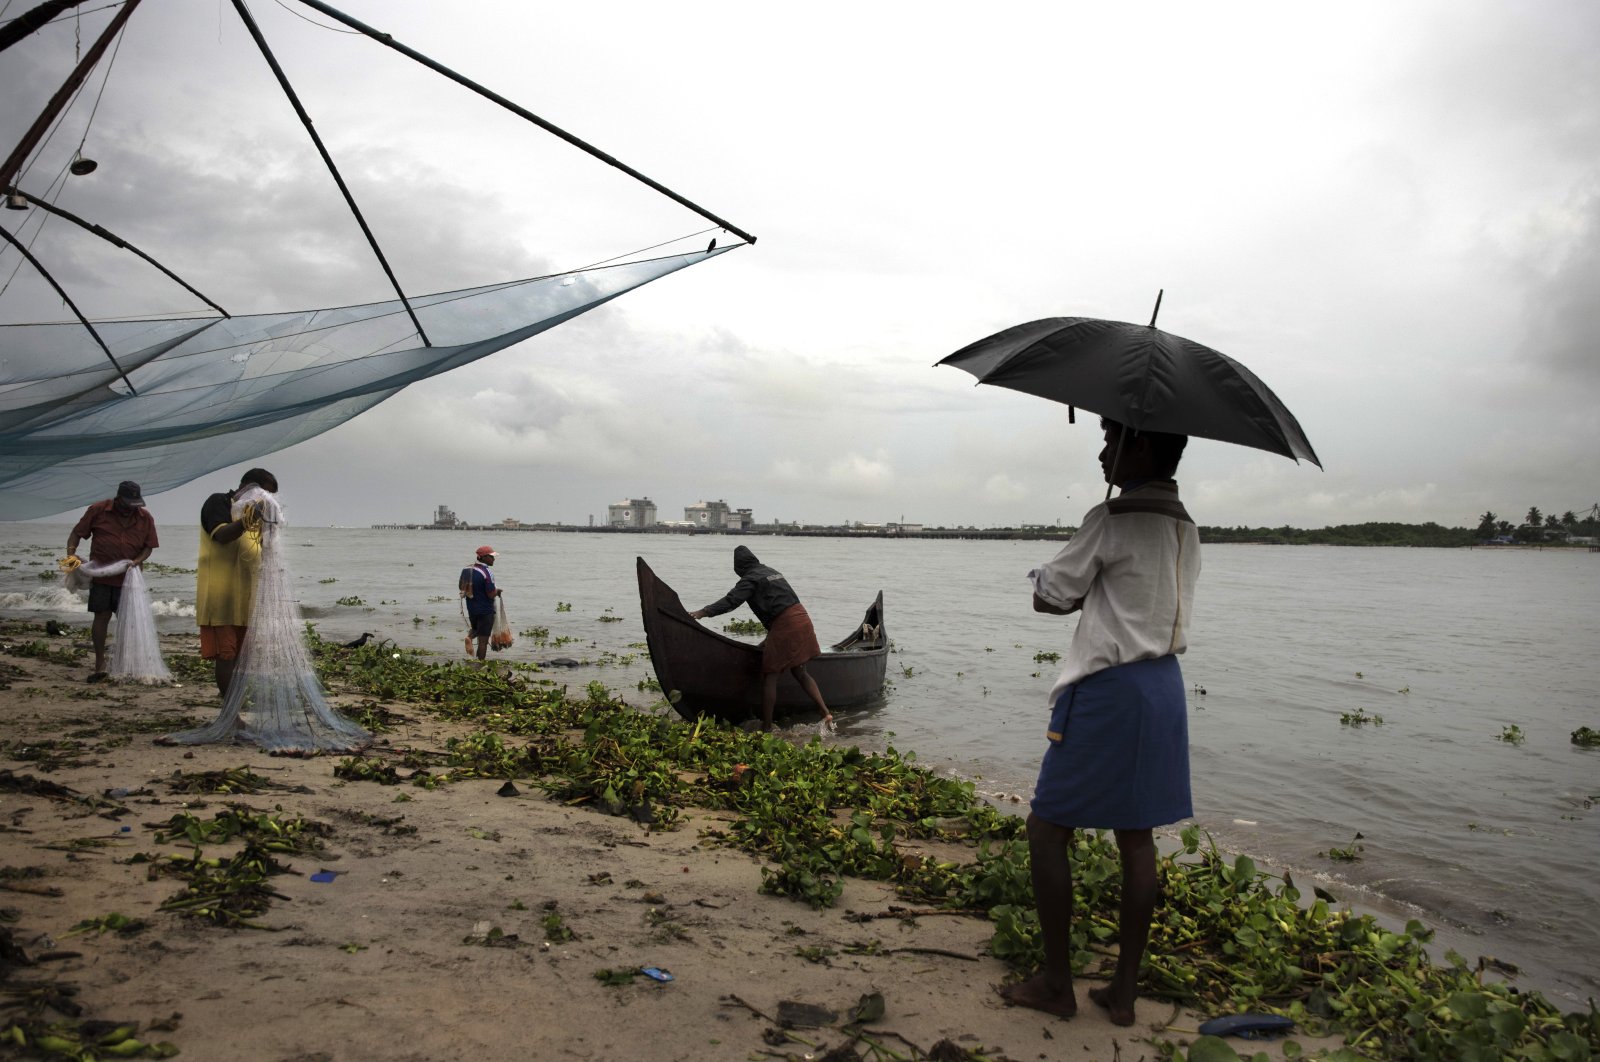 A man holding an umbrella watches fishermen at work on the Arabian sea coast during monsoon rains in Kochi, Kerala state, India, June 22 2020. (AP Photo)